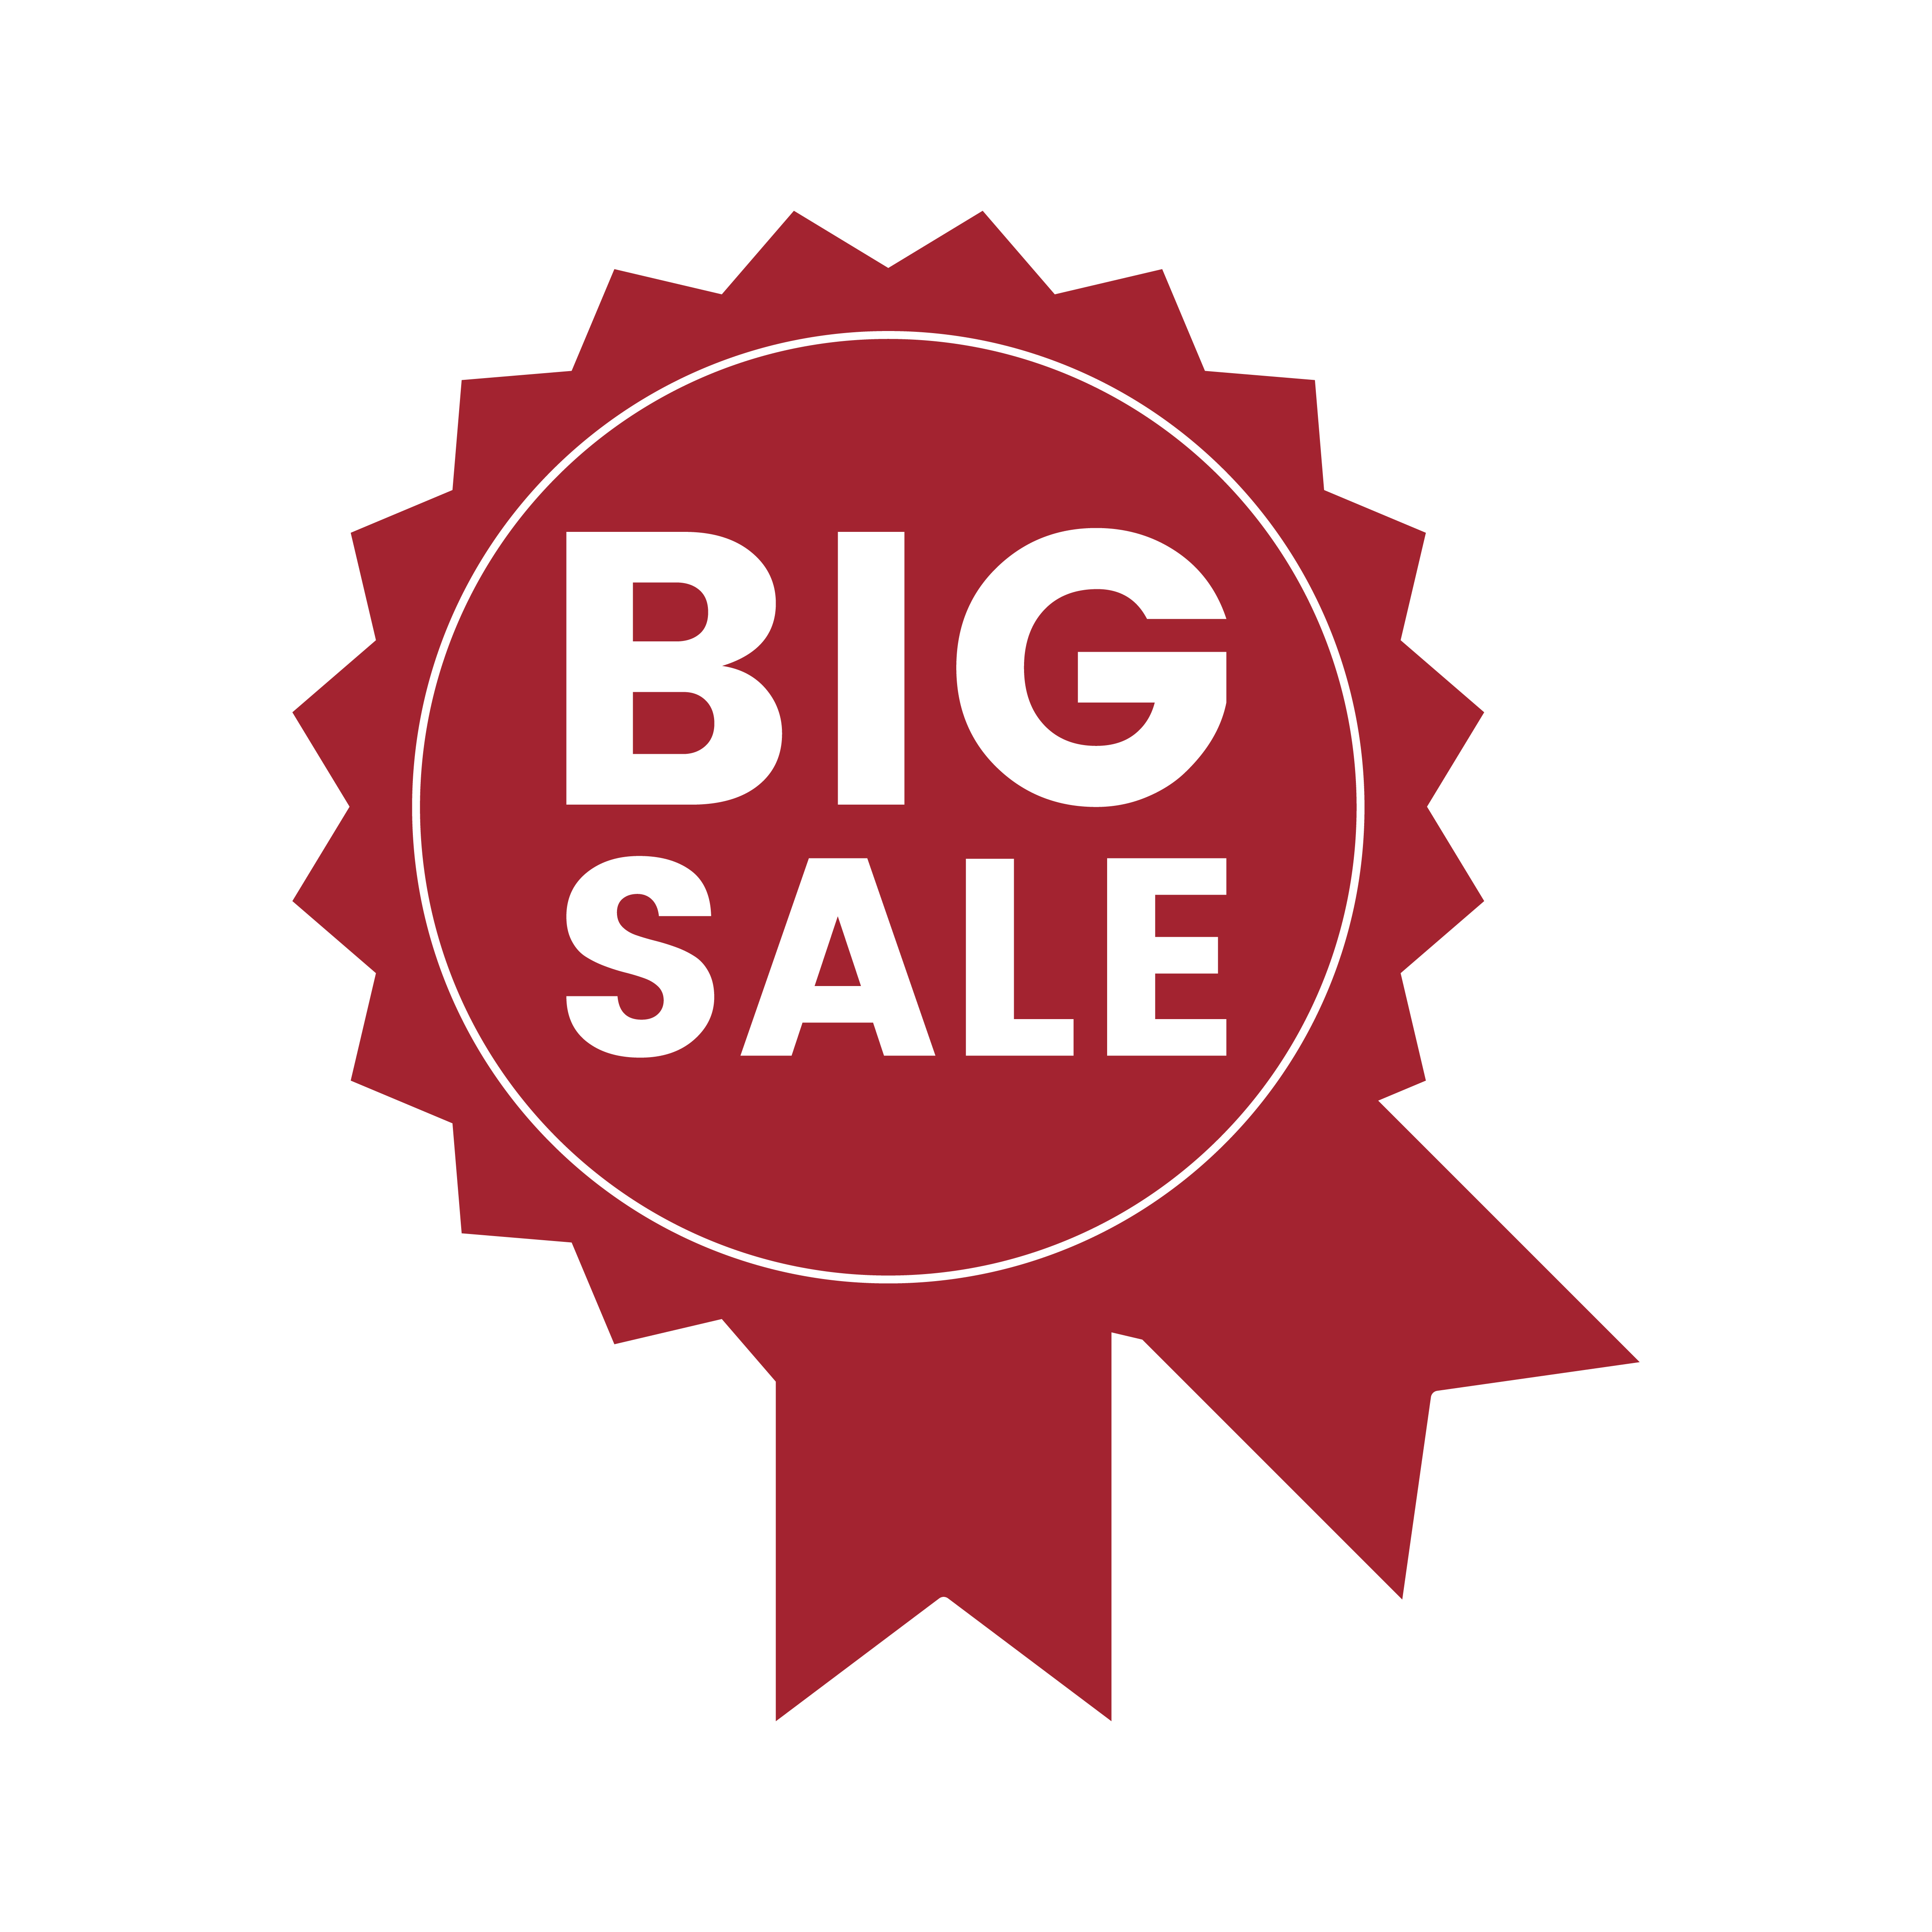 Big sale promotional badge vector - Download Free Vectors, Clipart ...